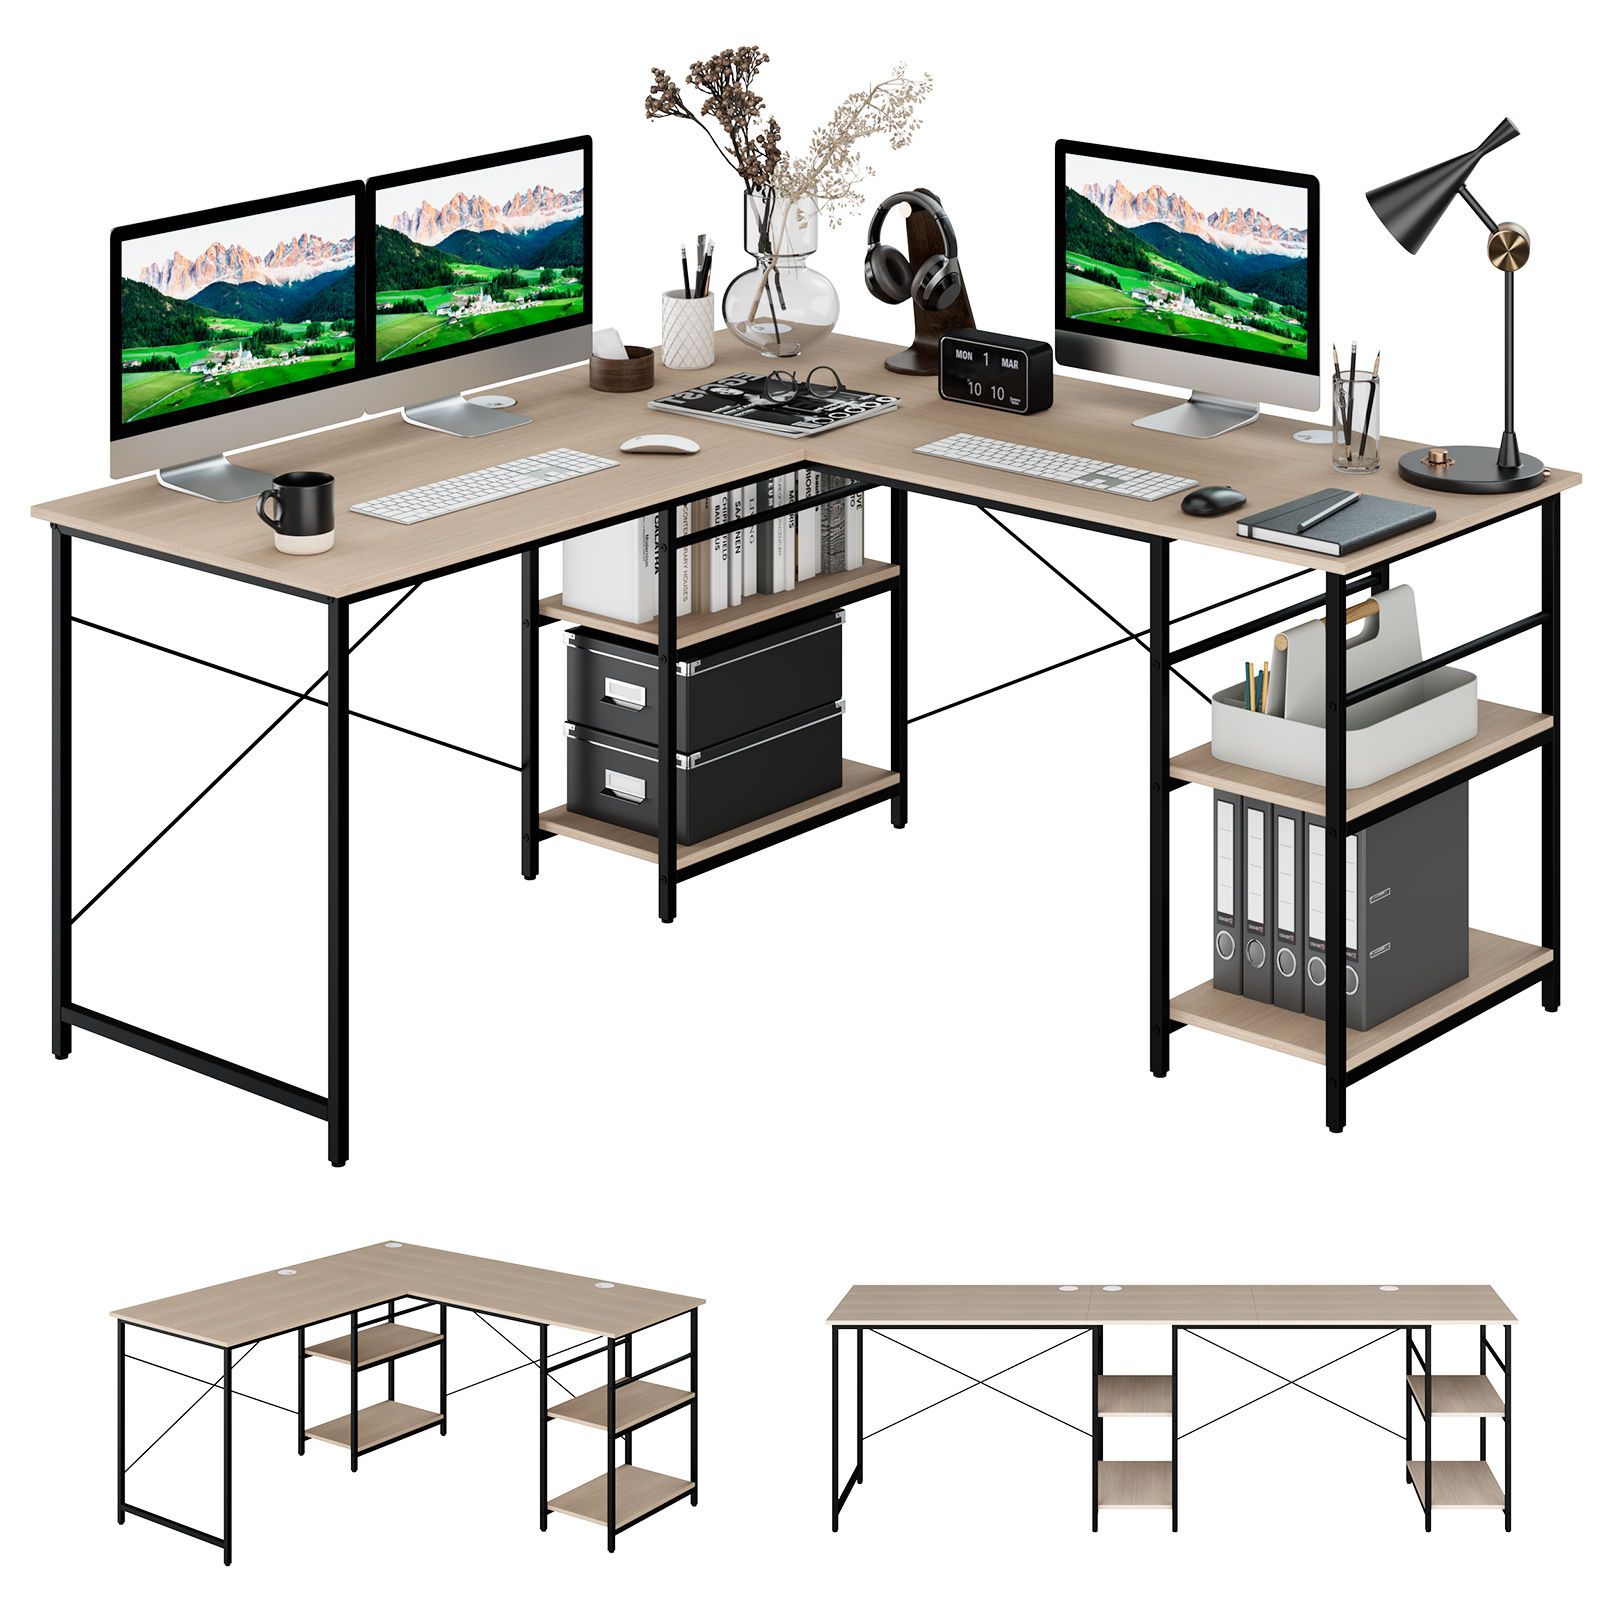 Wooden Industrial L-Shaped Desk with Storage Shelves-Natural